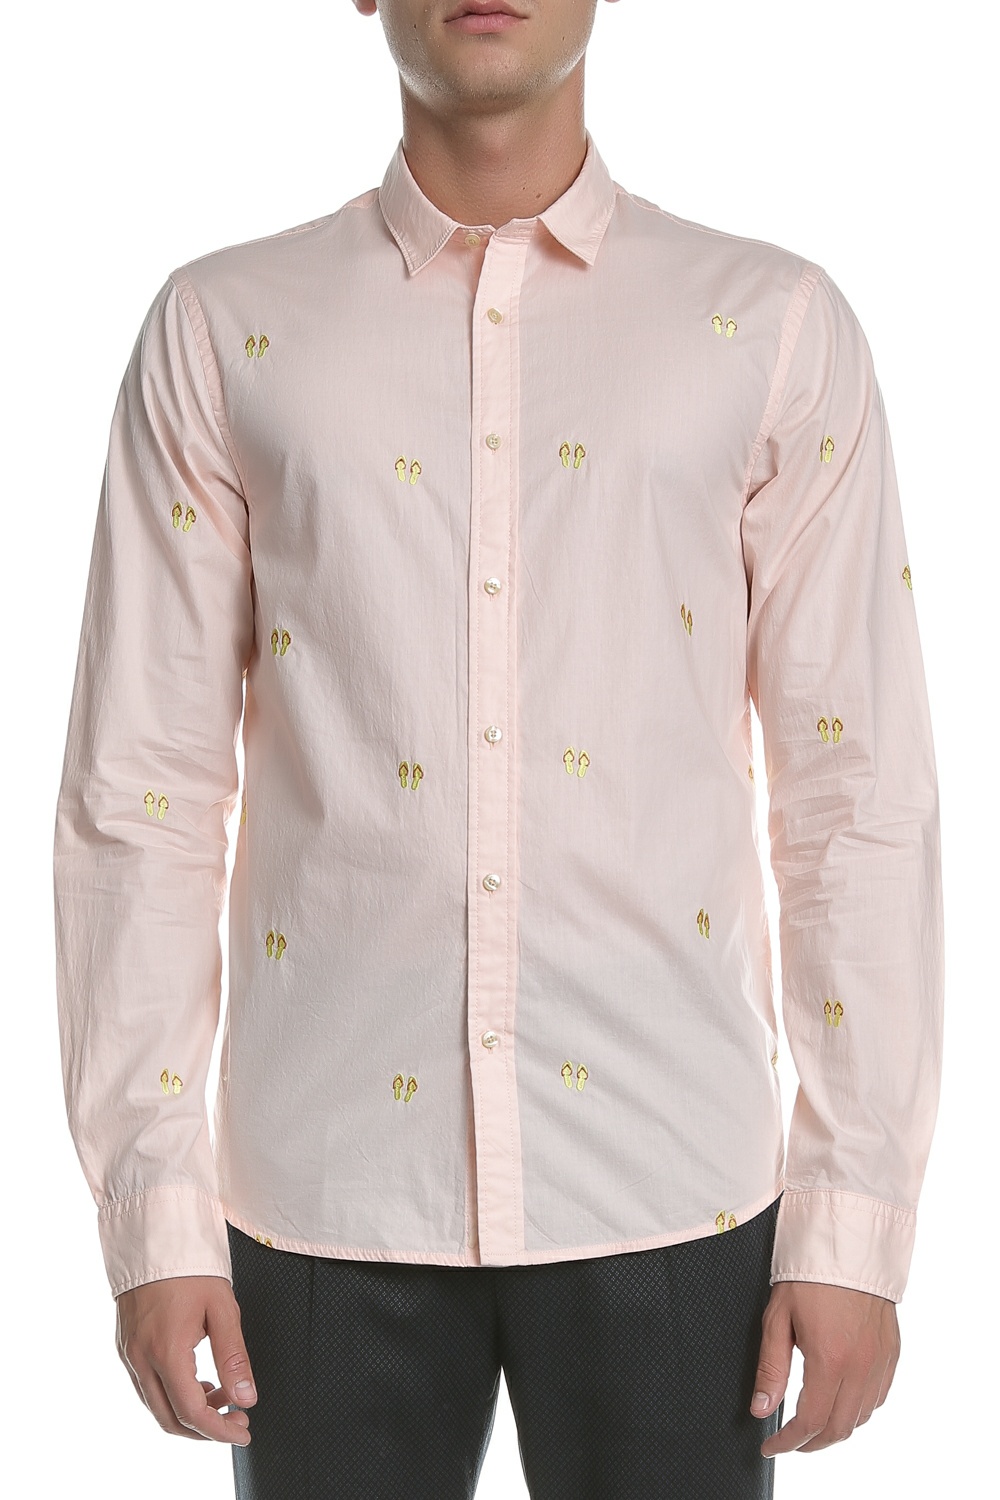 SCOTCH & SODA - Ανδρικό μακρυμάνικο πουκάμισο SCOTCH & SODA ροζ Ανδρικά/Ρούχα/Πουκάμισα/Μακρυμάνικα